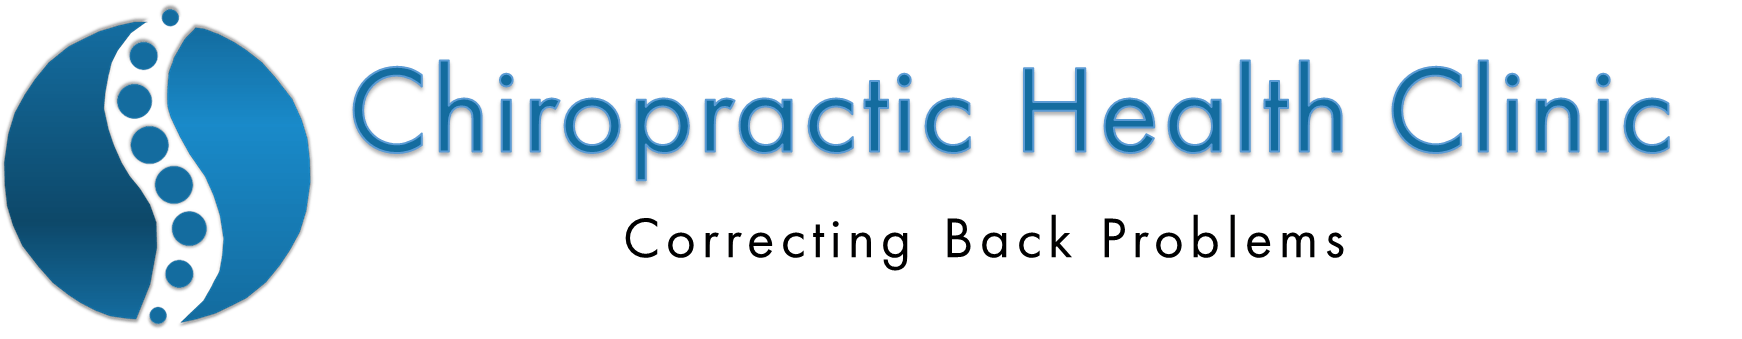 Chiropractor Health Clinic Logo